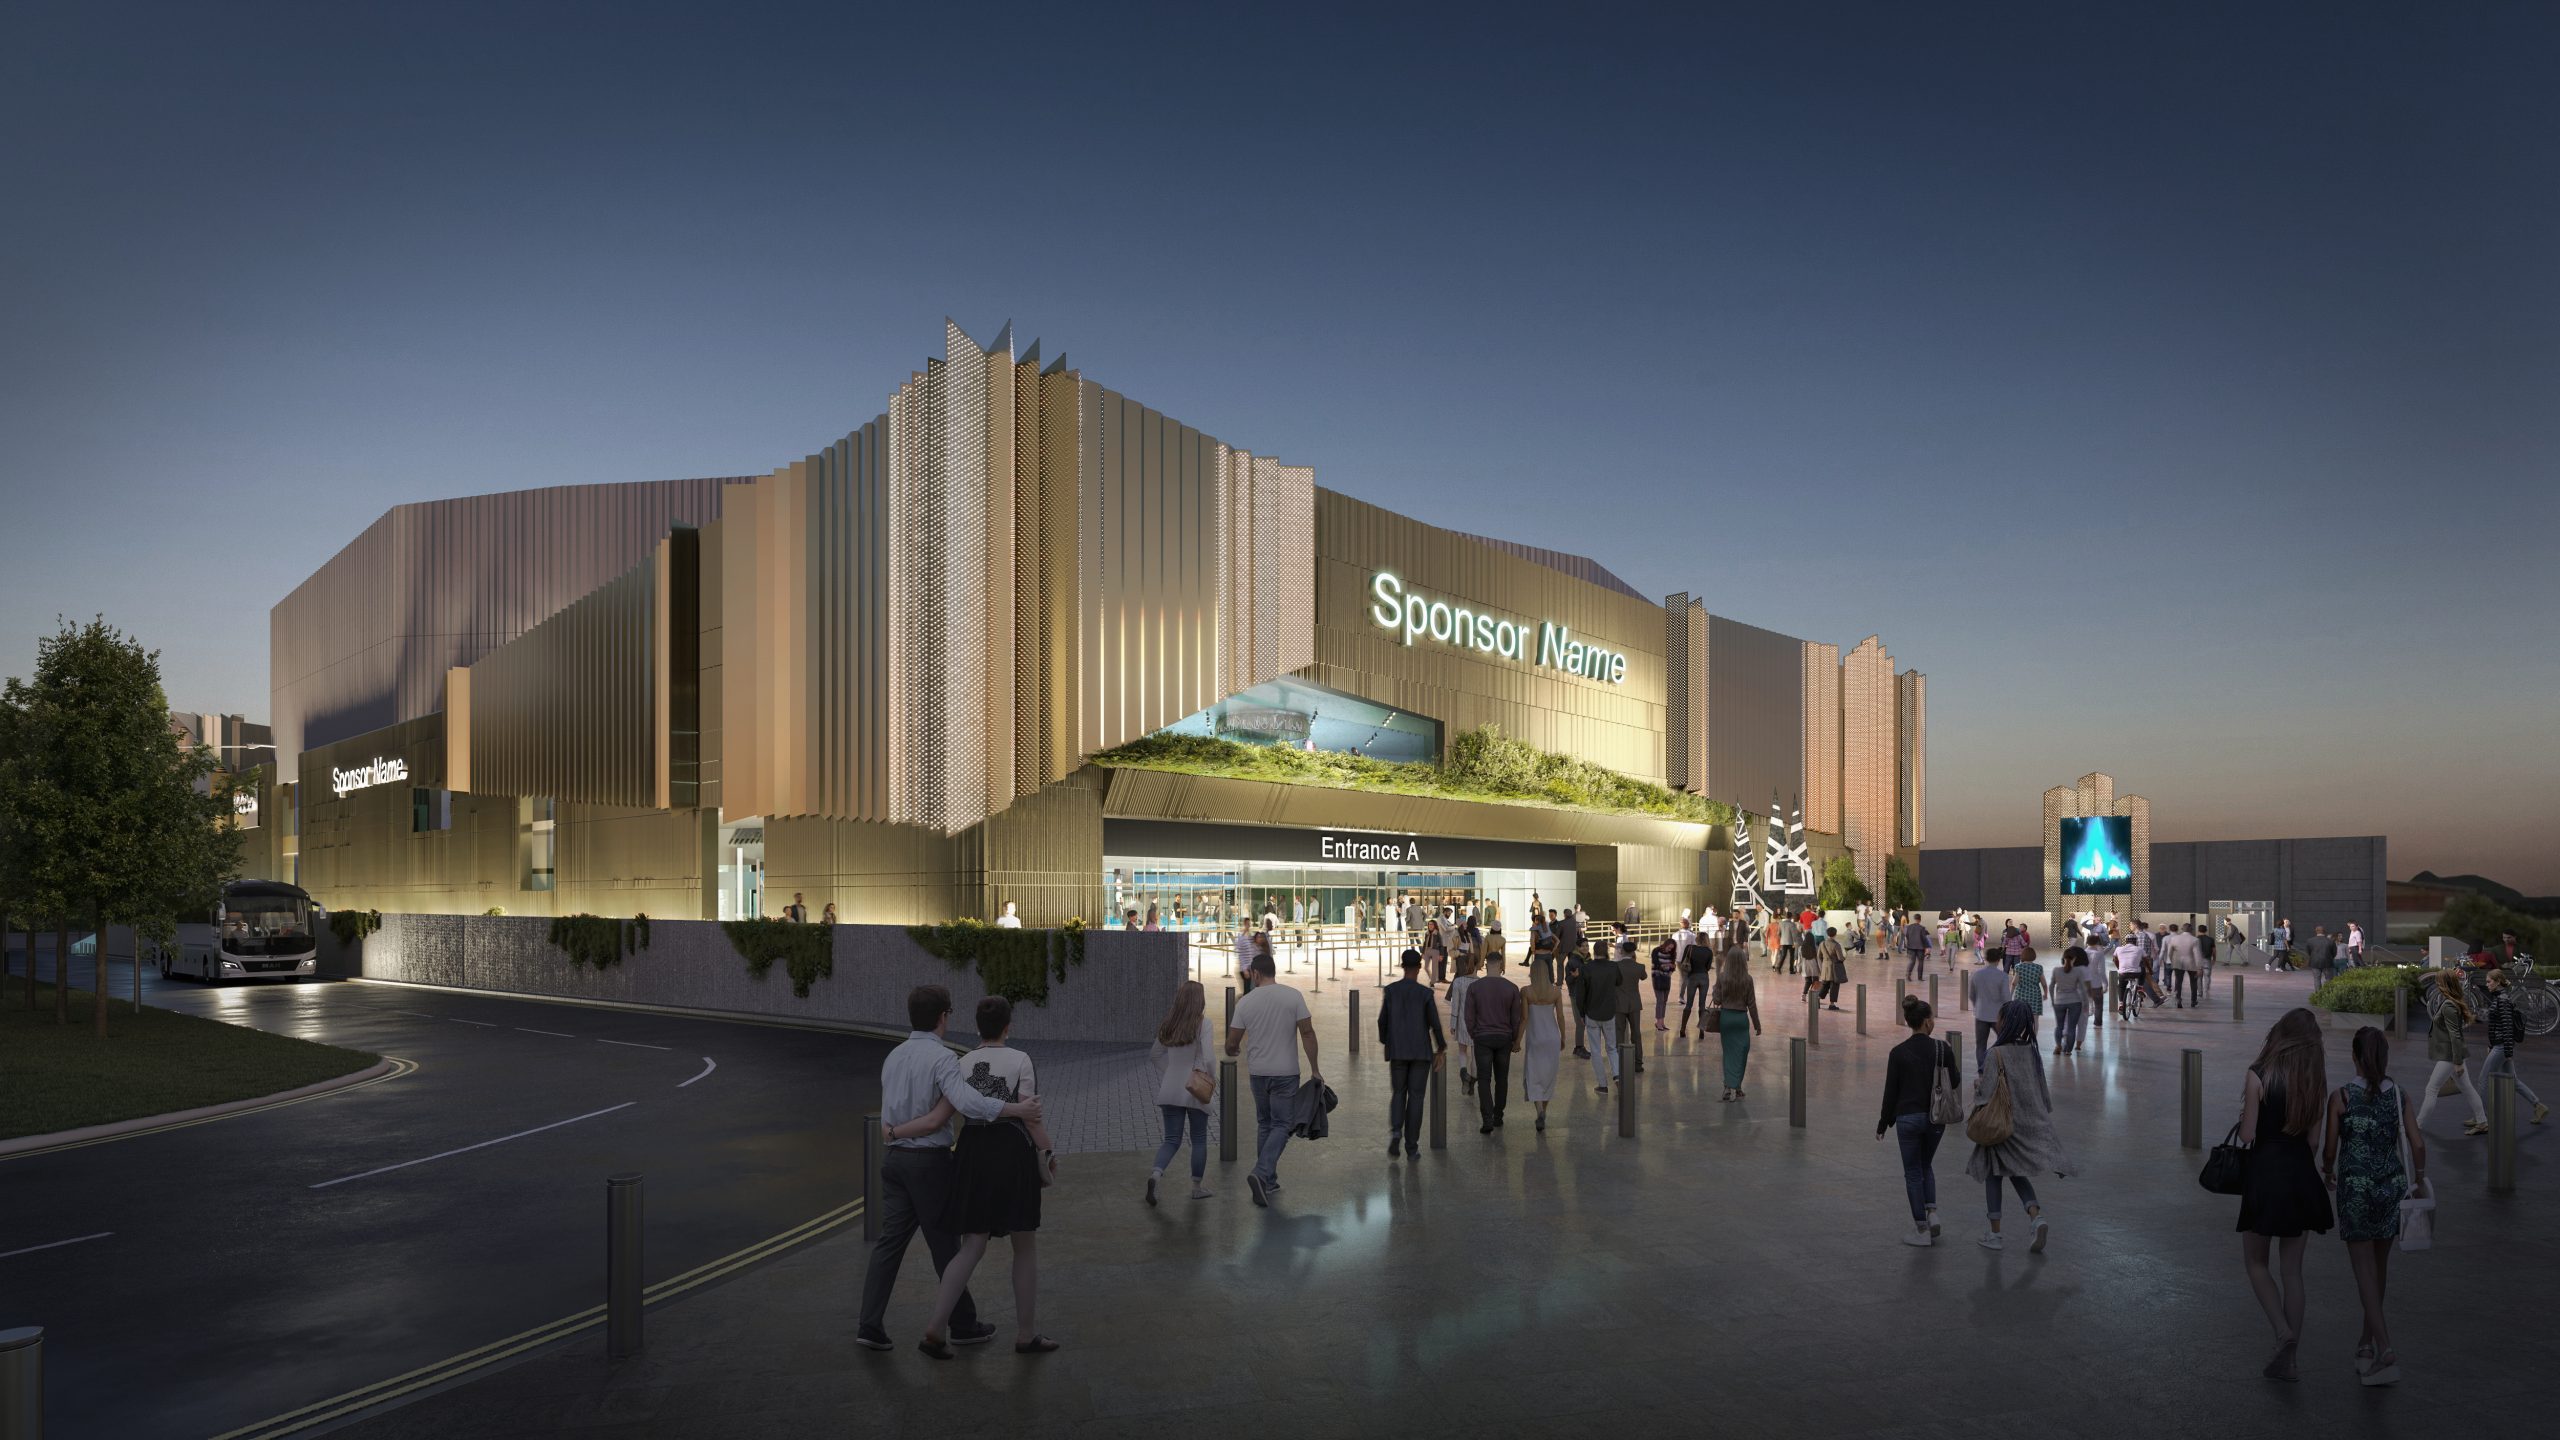 Edinburgh Park Arena reaches planning stage